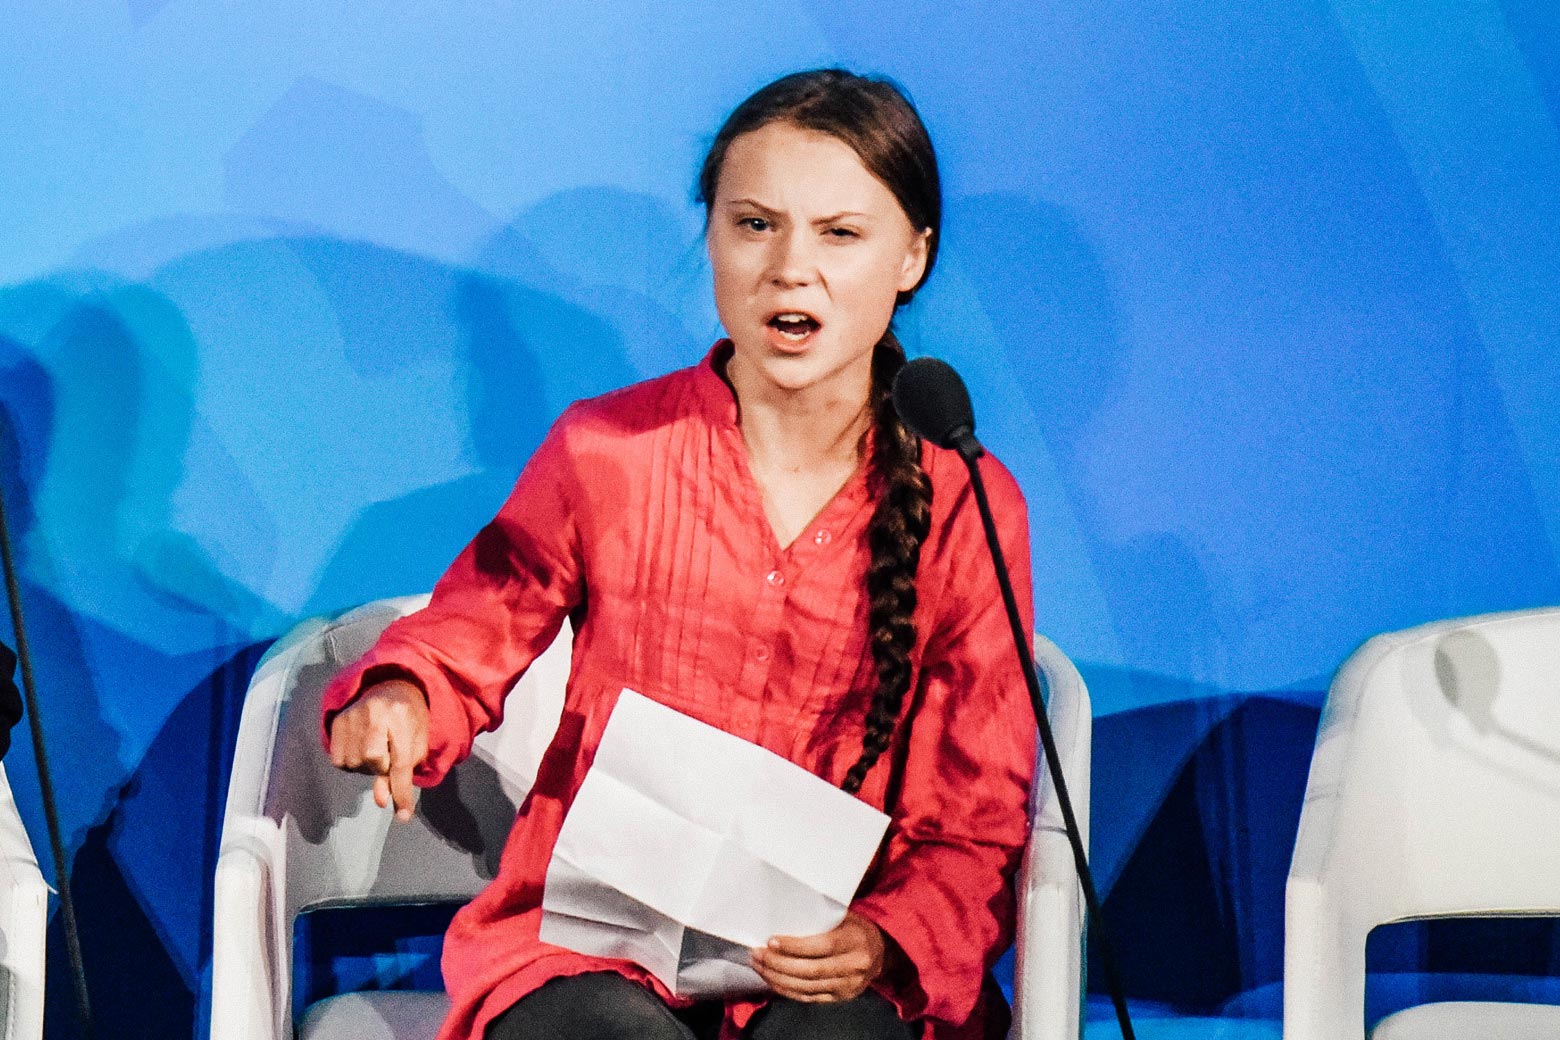 Greta Thunberg gives a speech.